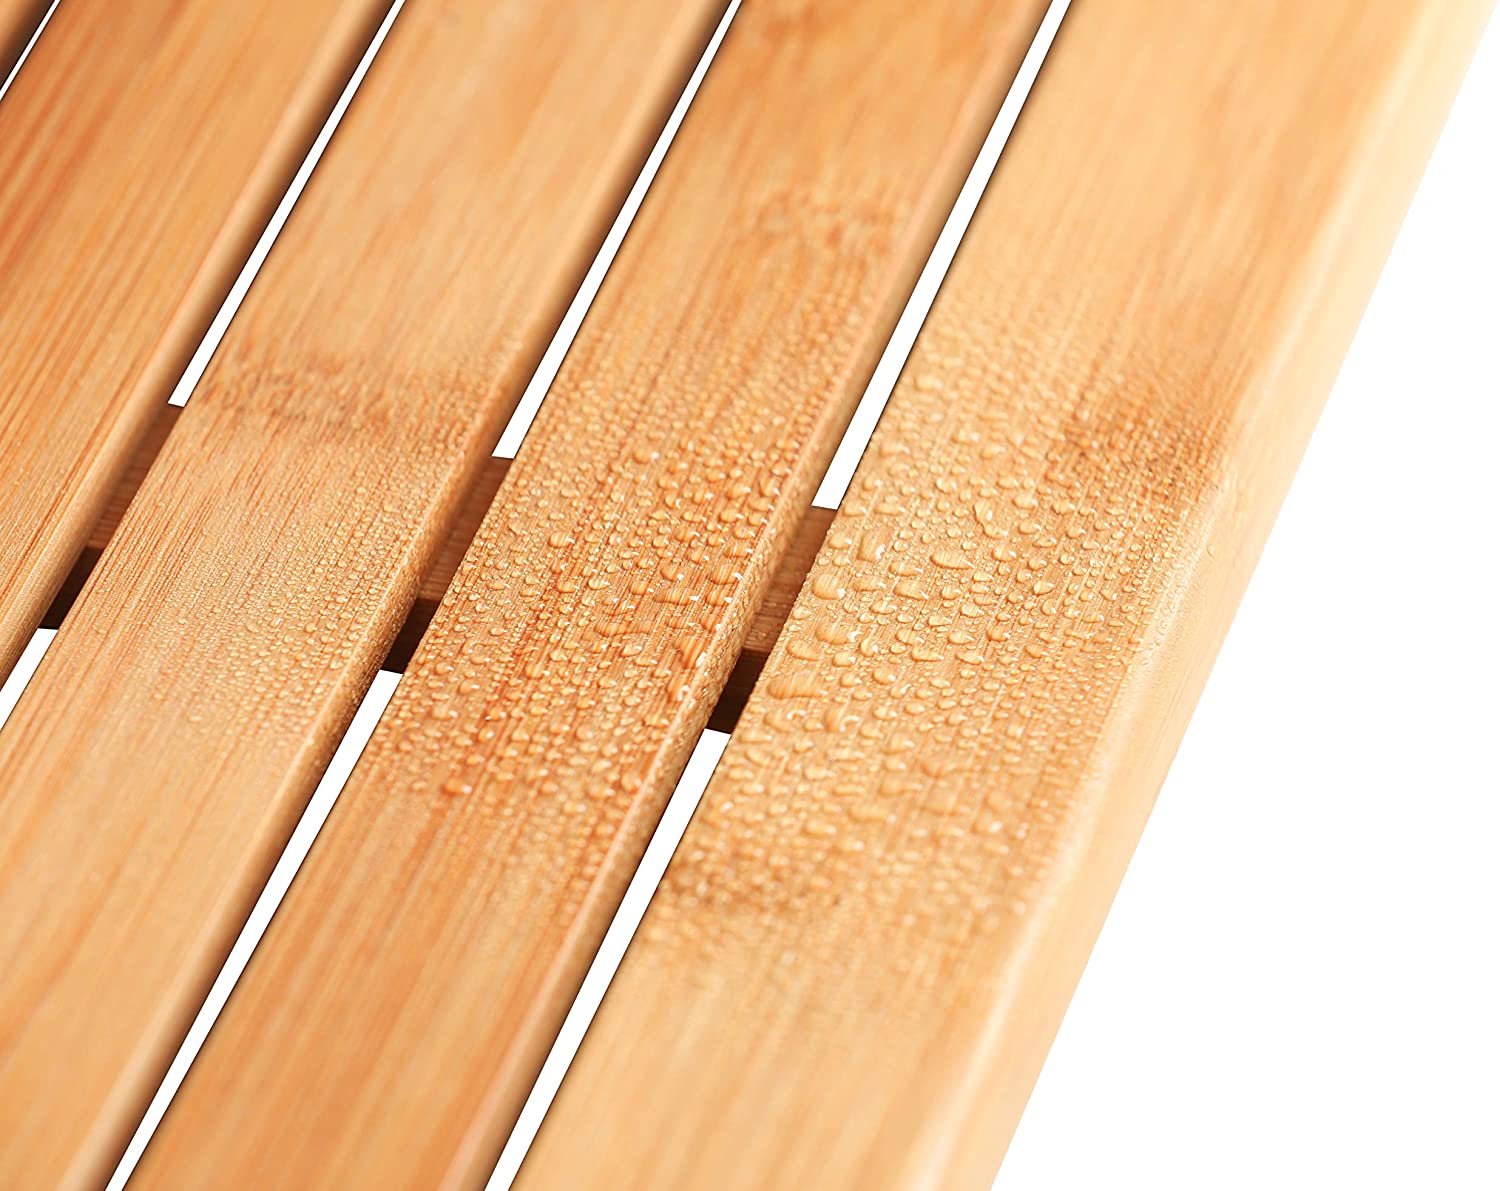 BATH MAT Natural Bamboo Wood Rubber Padded Bottom Foldable Long 18x34  ZPIRATES